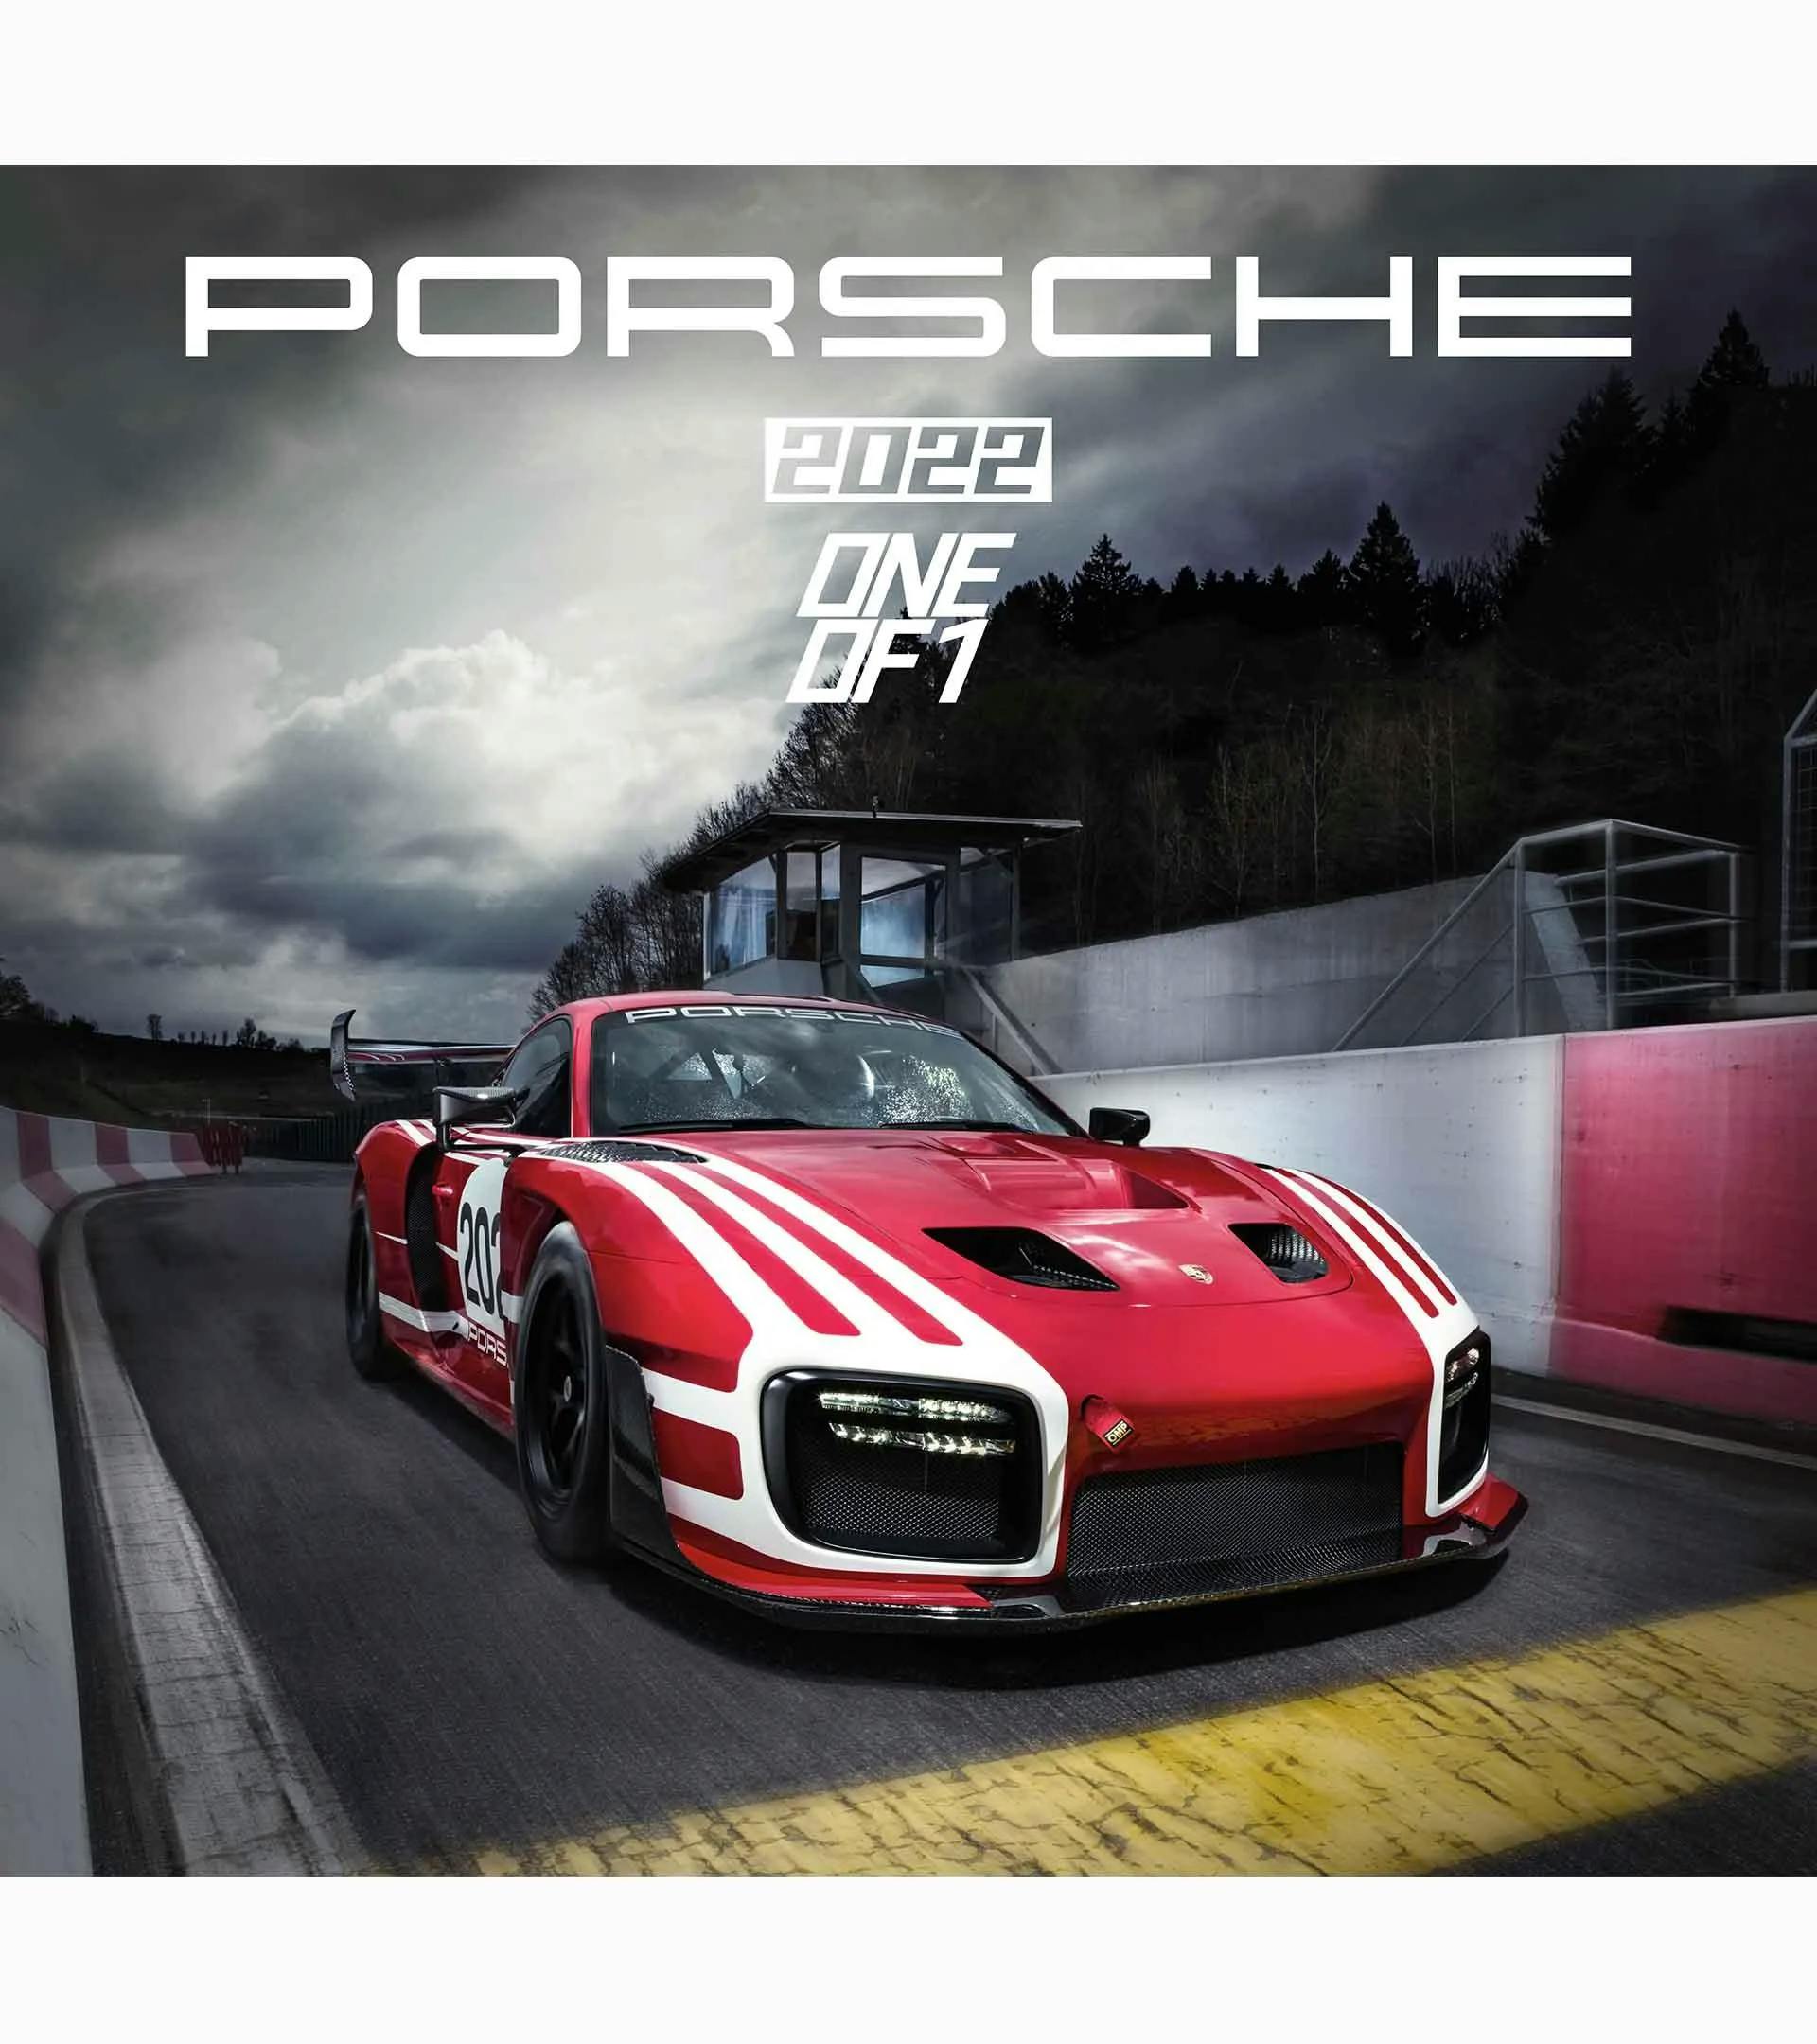 Porsche Kalender 2022 „One Of 1“ 1